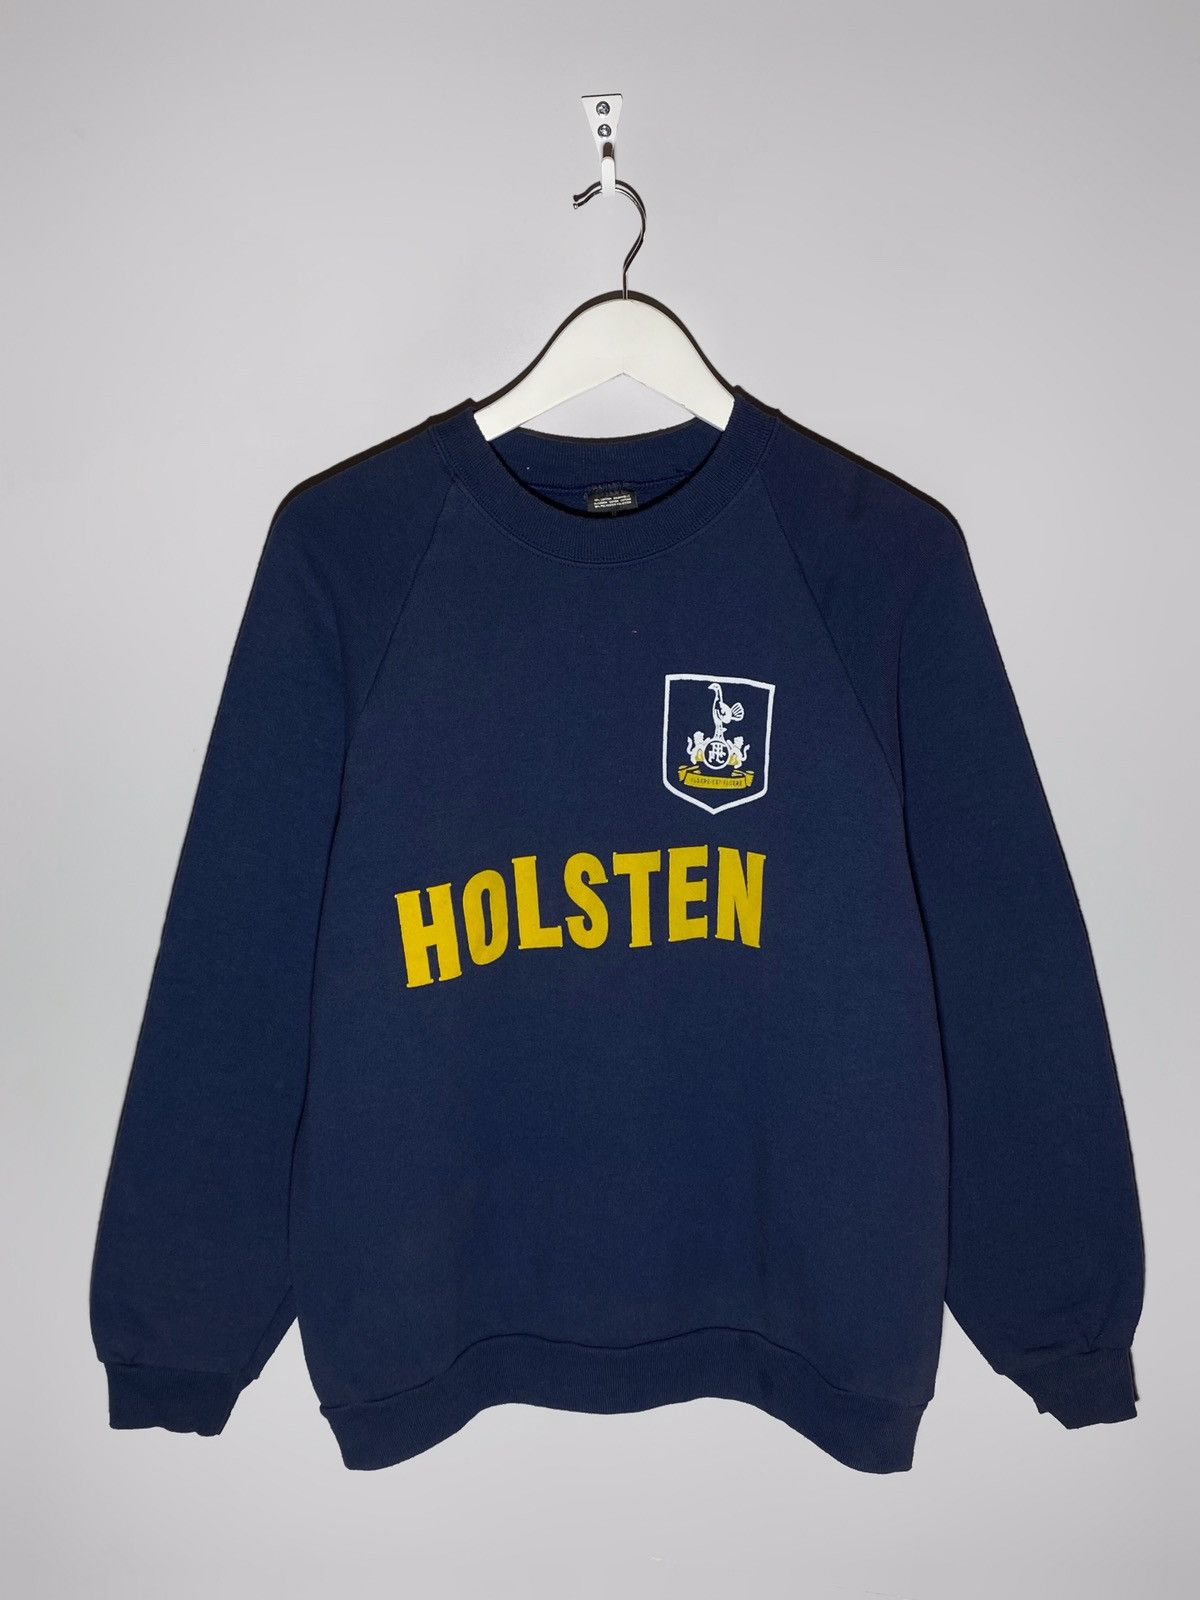 Pre-owned Vintage 90's Tottenham Hotspur Holsten Retro Sweatshirt In Blue